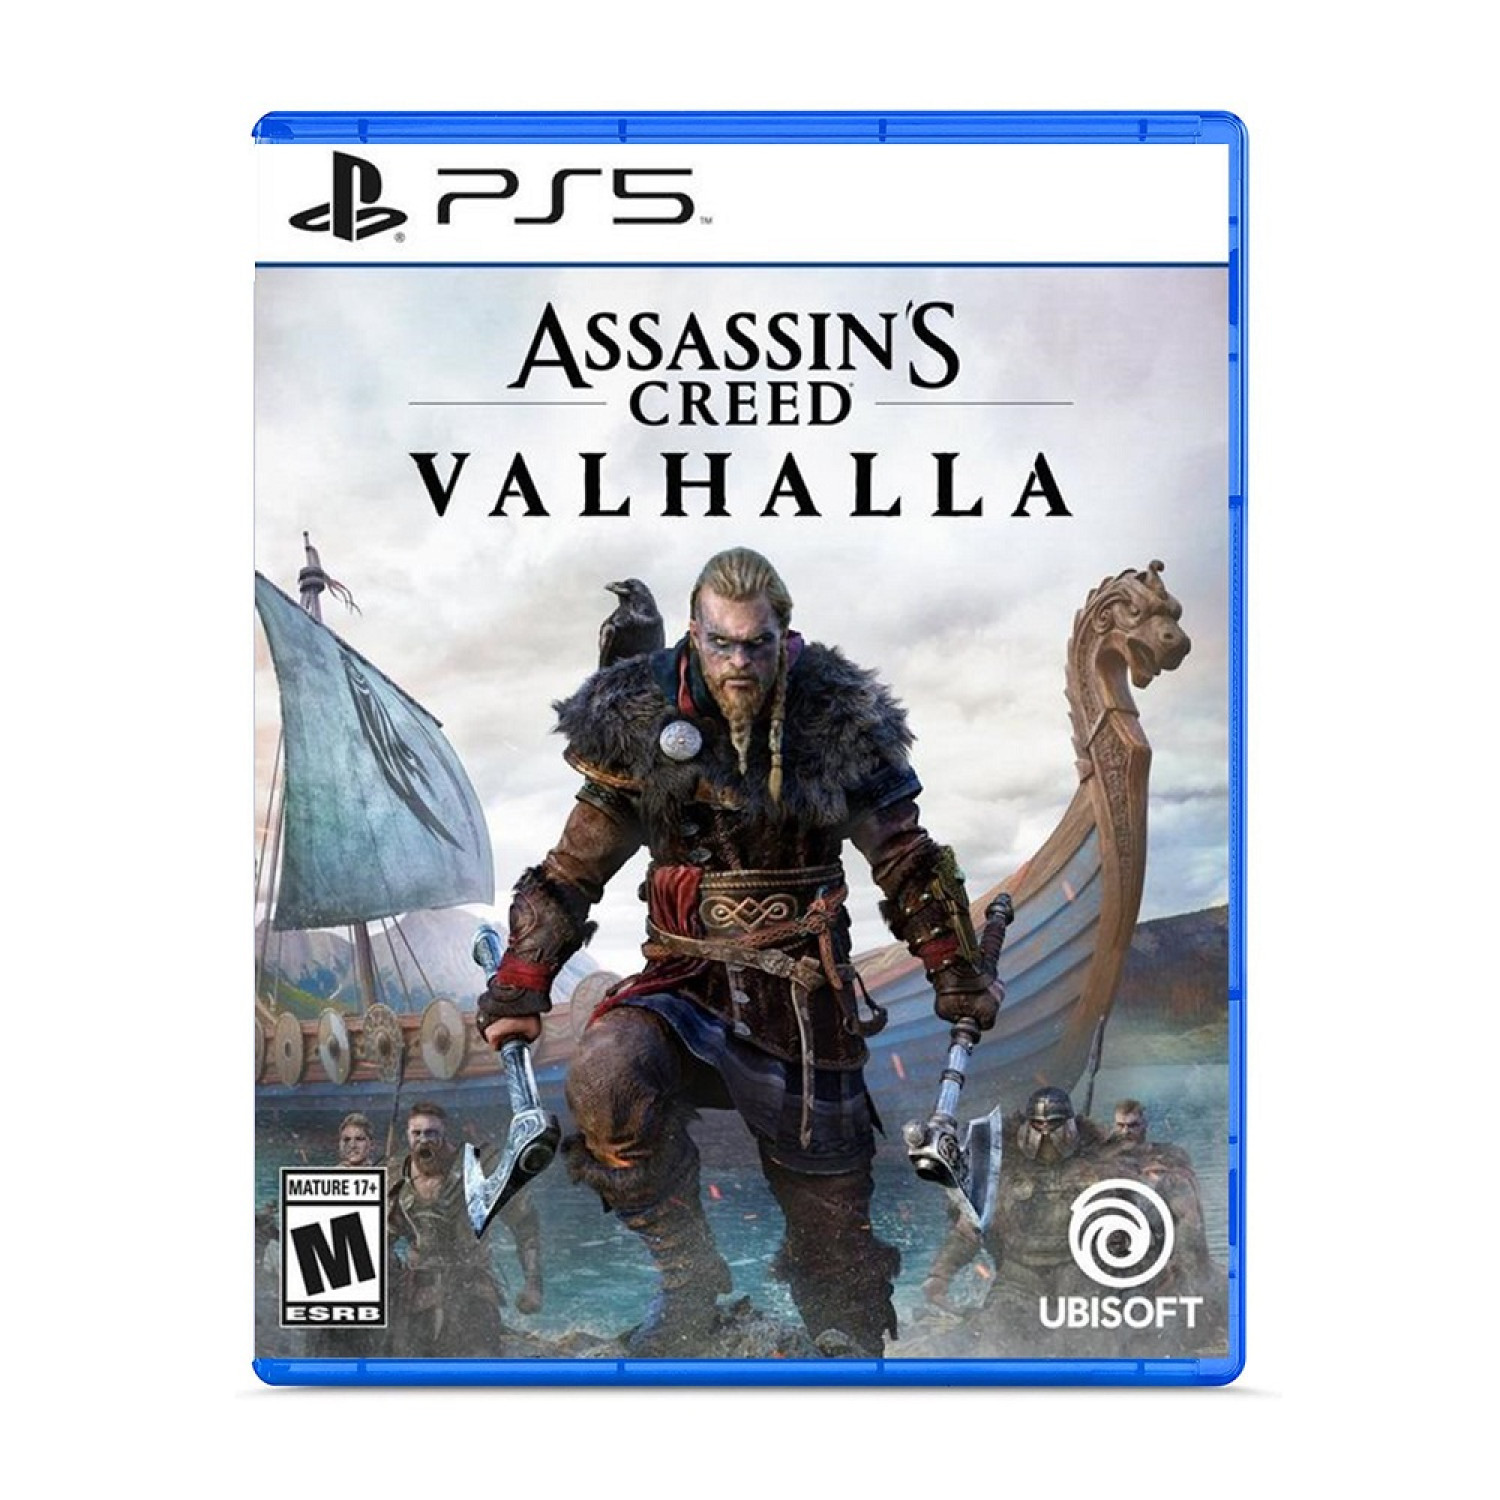 Ø¨Ø§Ø²ÛŒ Assassin's Creed Valhalla - PS5